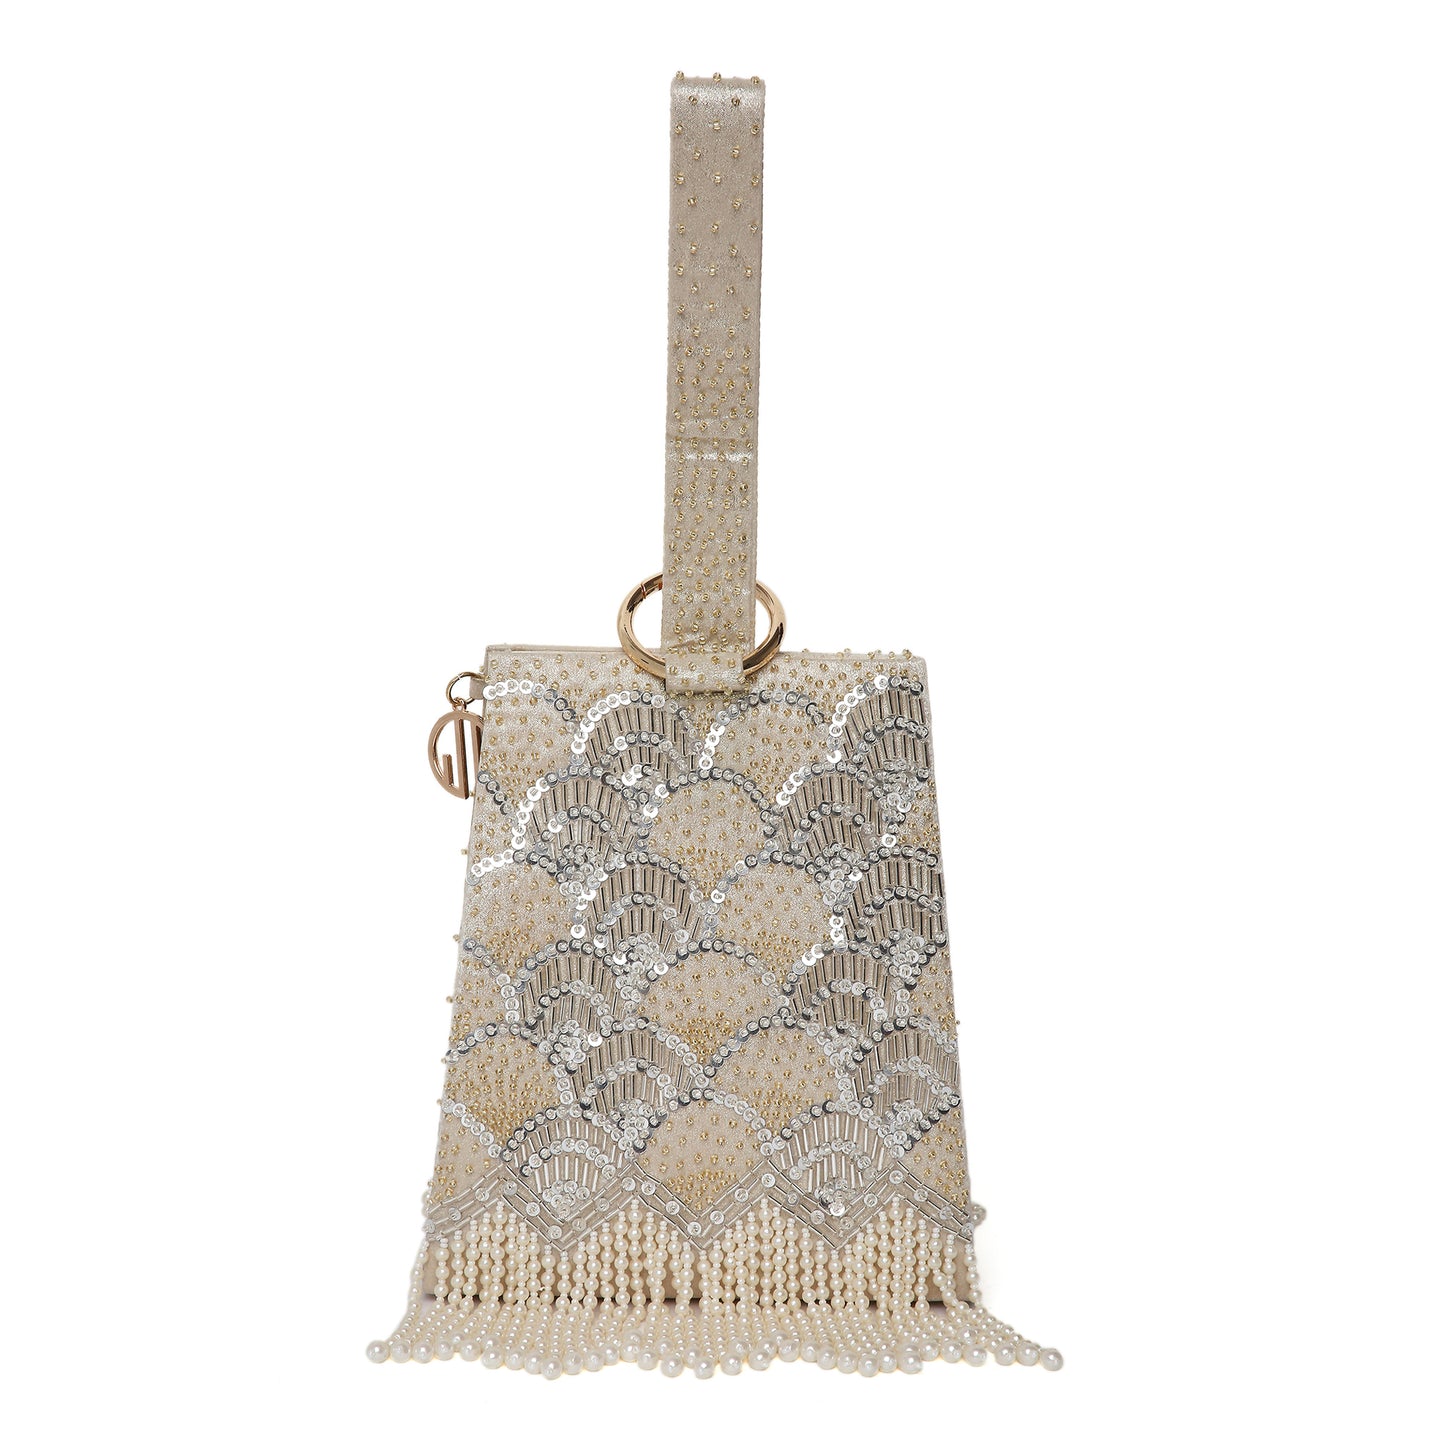 Rayna Gold embellished Handbag